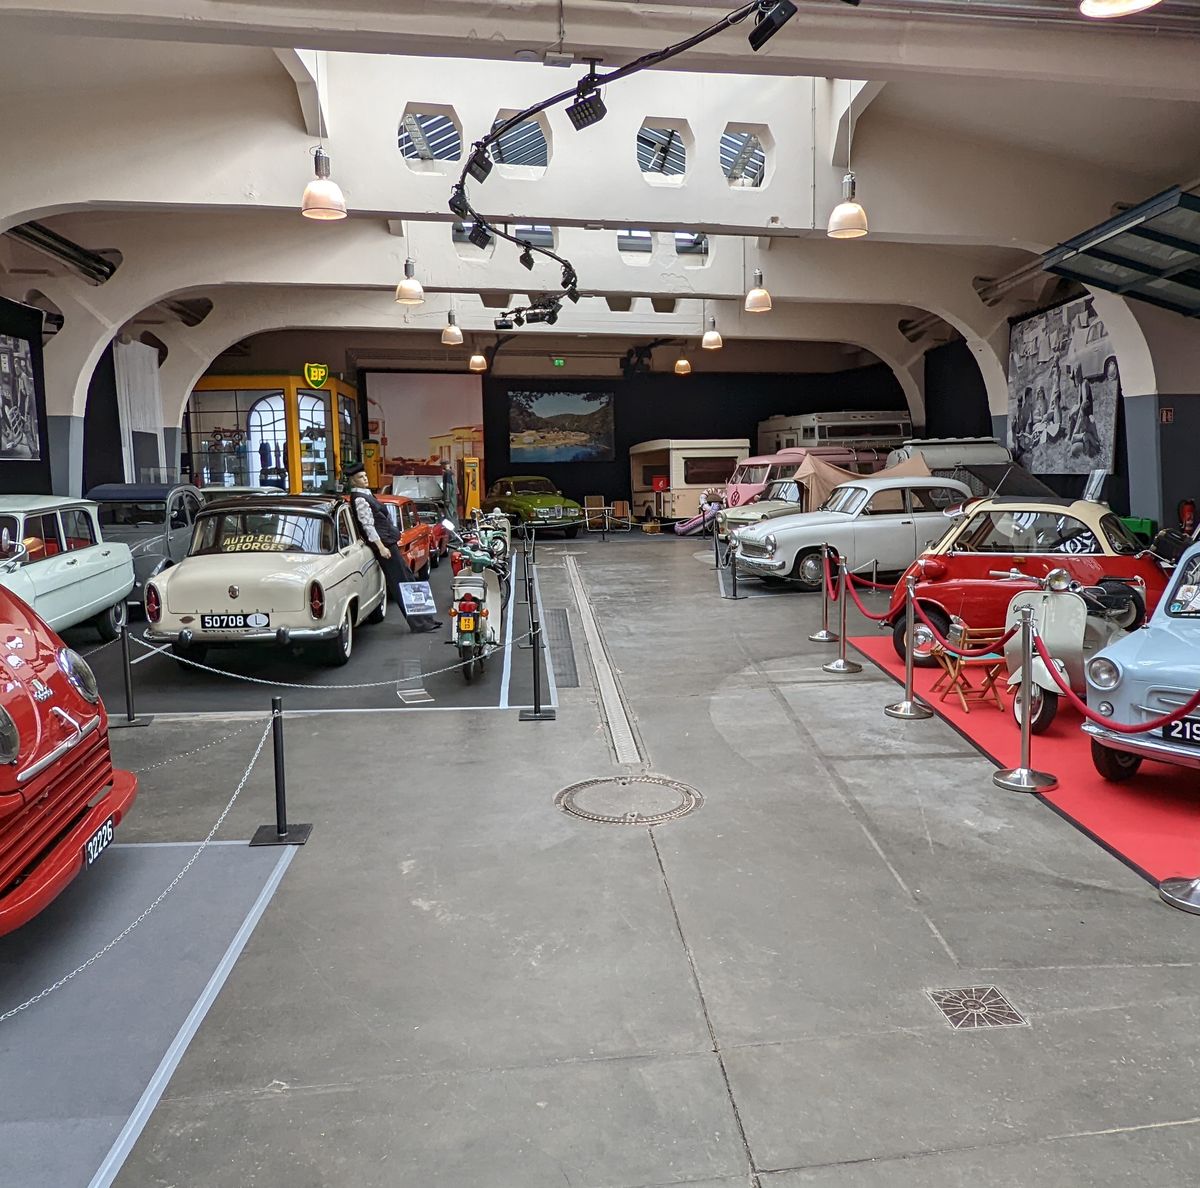 Das Automuseum Diekirch präsentiert sich als Mekka für MG-Fans